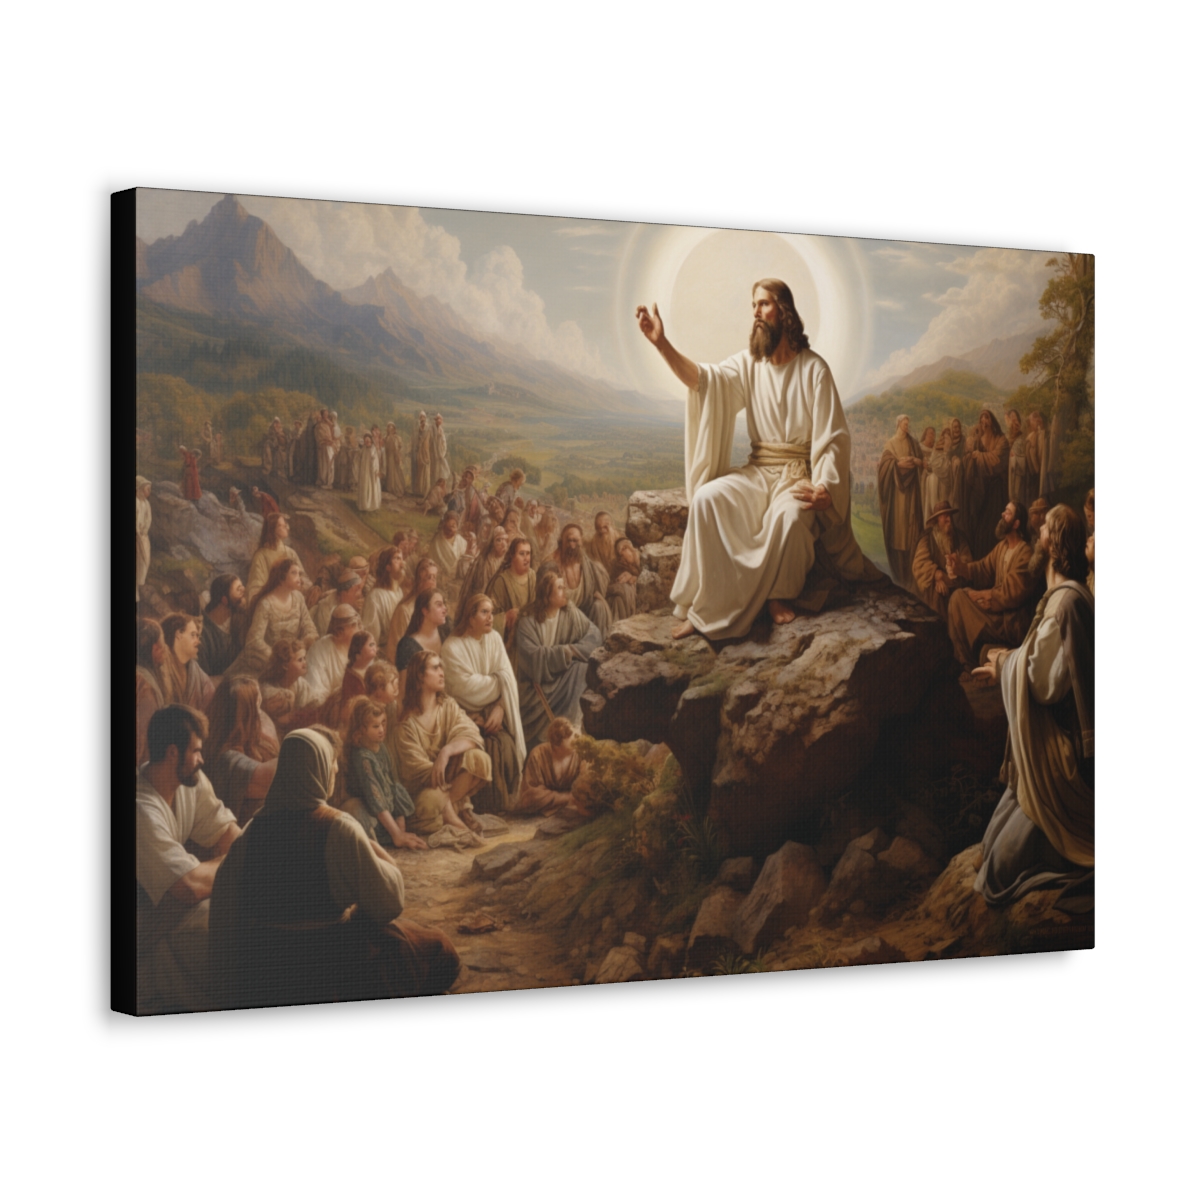 Jesus Art: The Fables